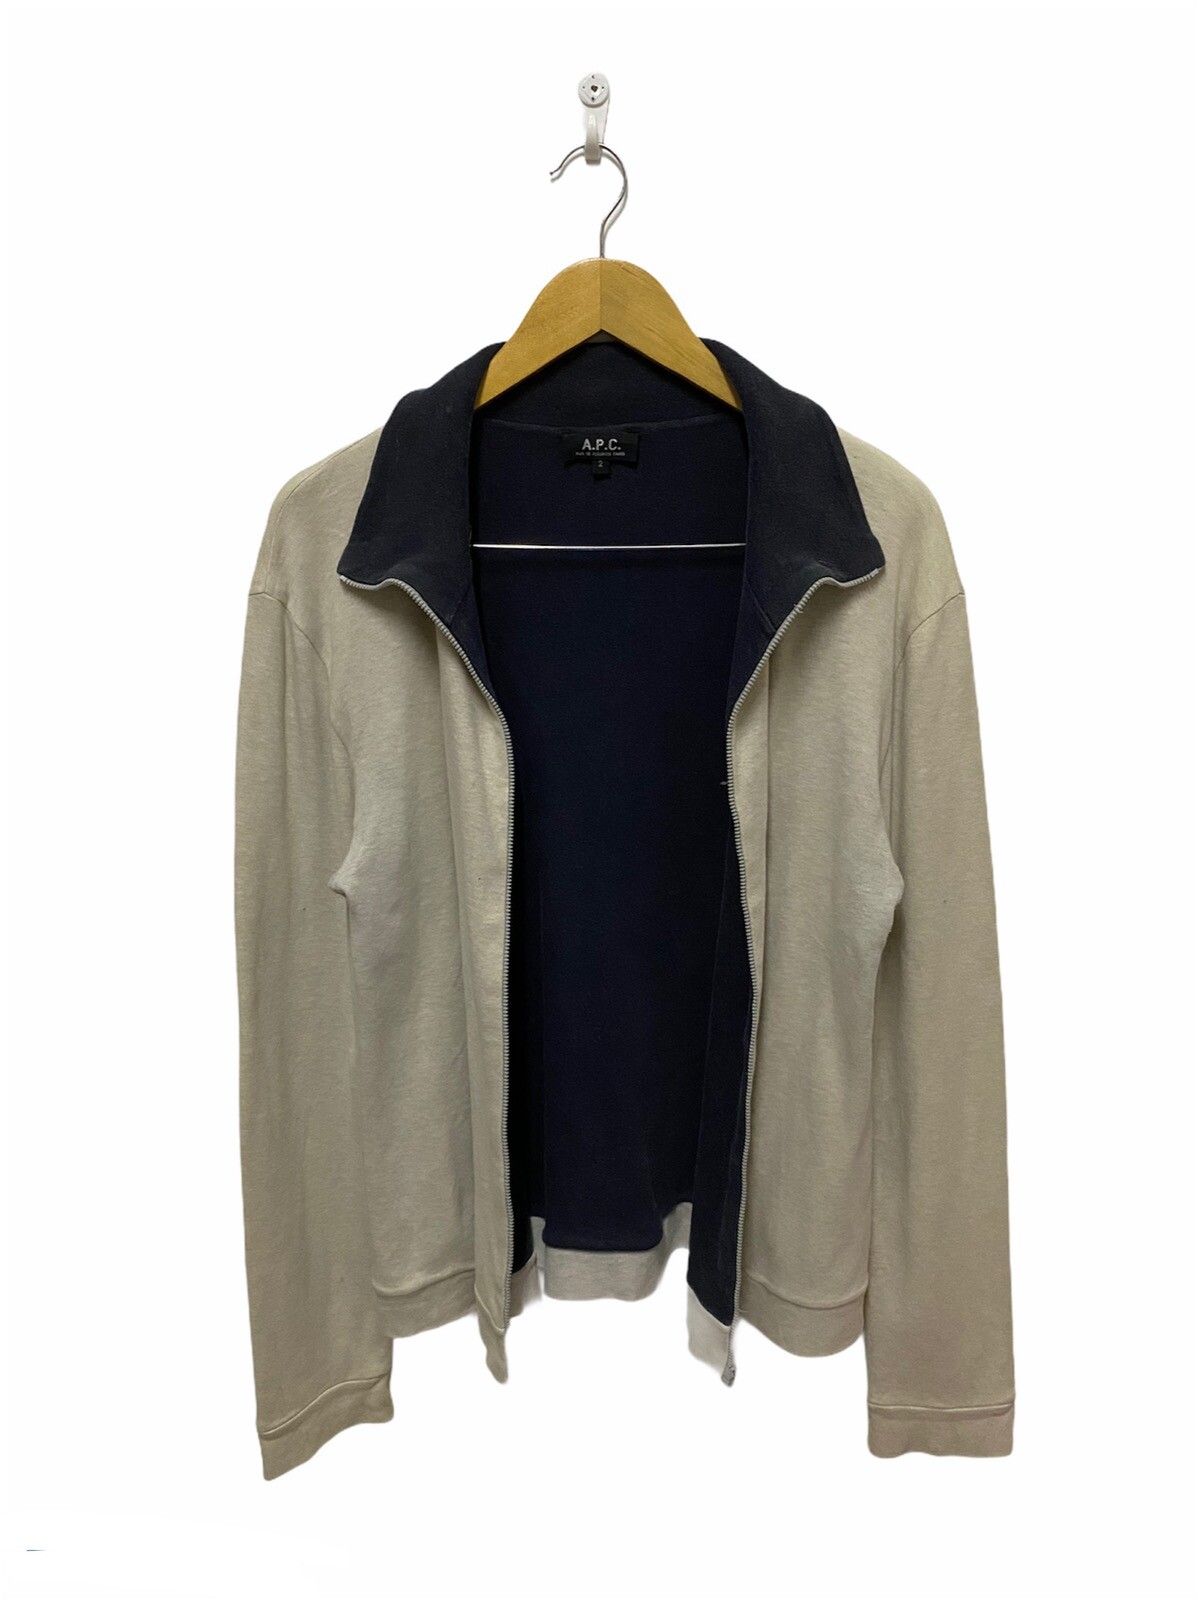 A.P.C Zipper Sweater Jacket - 1